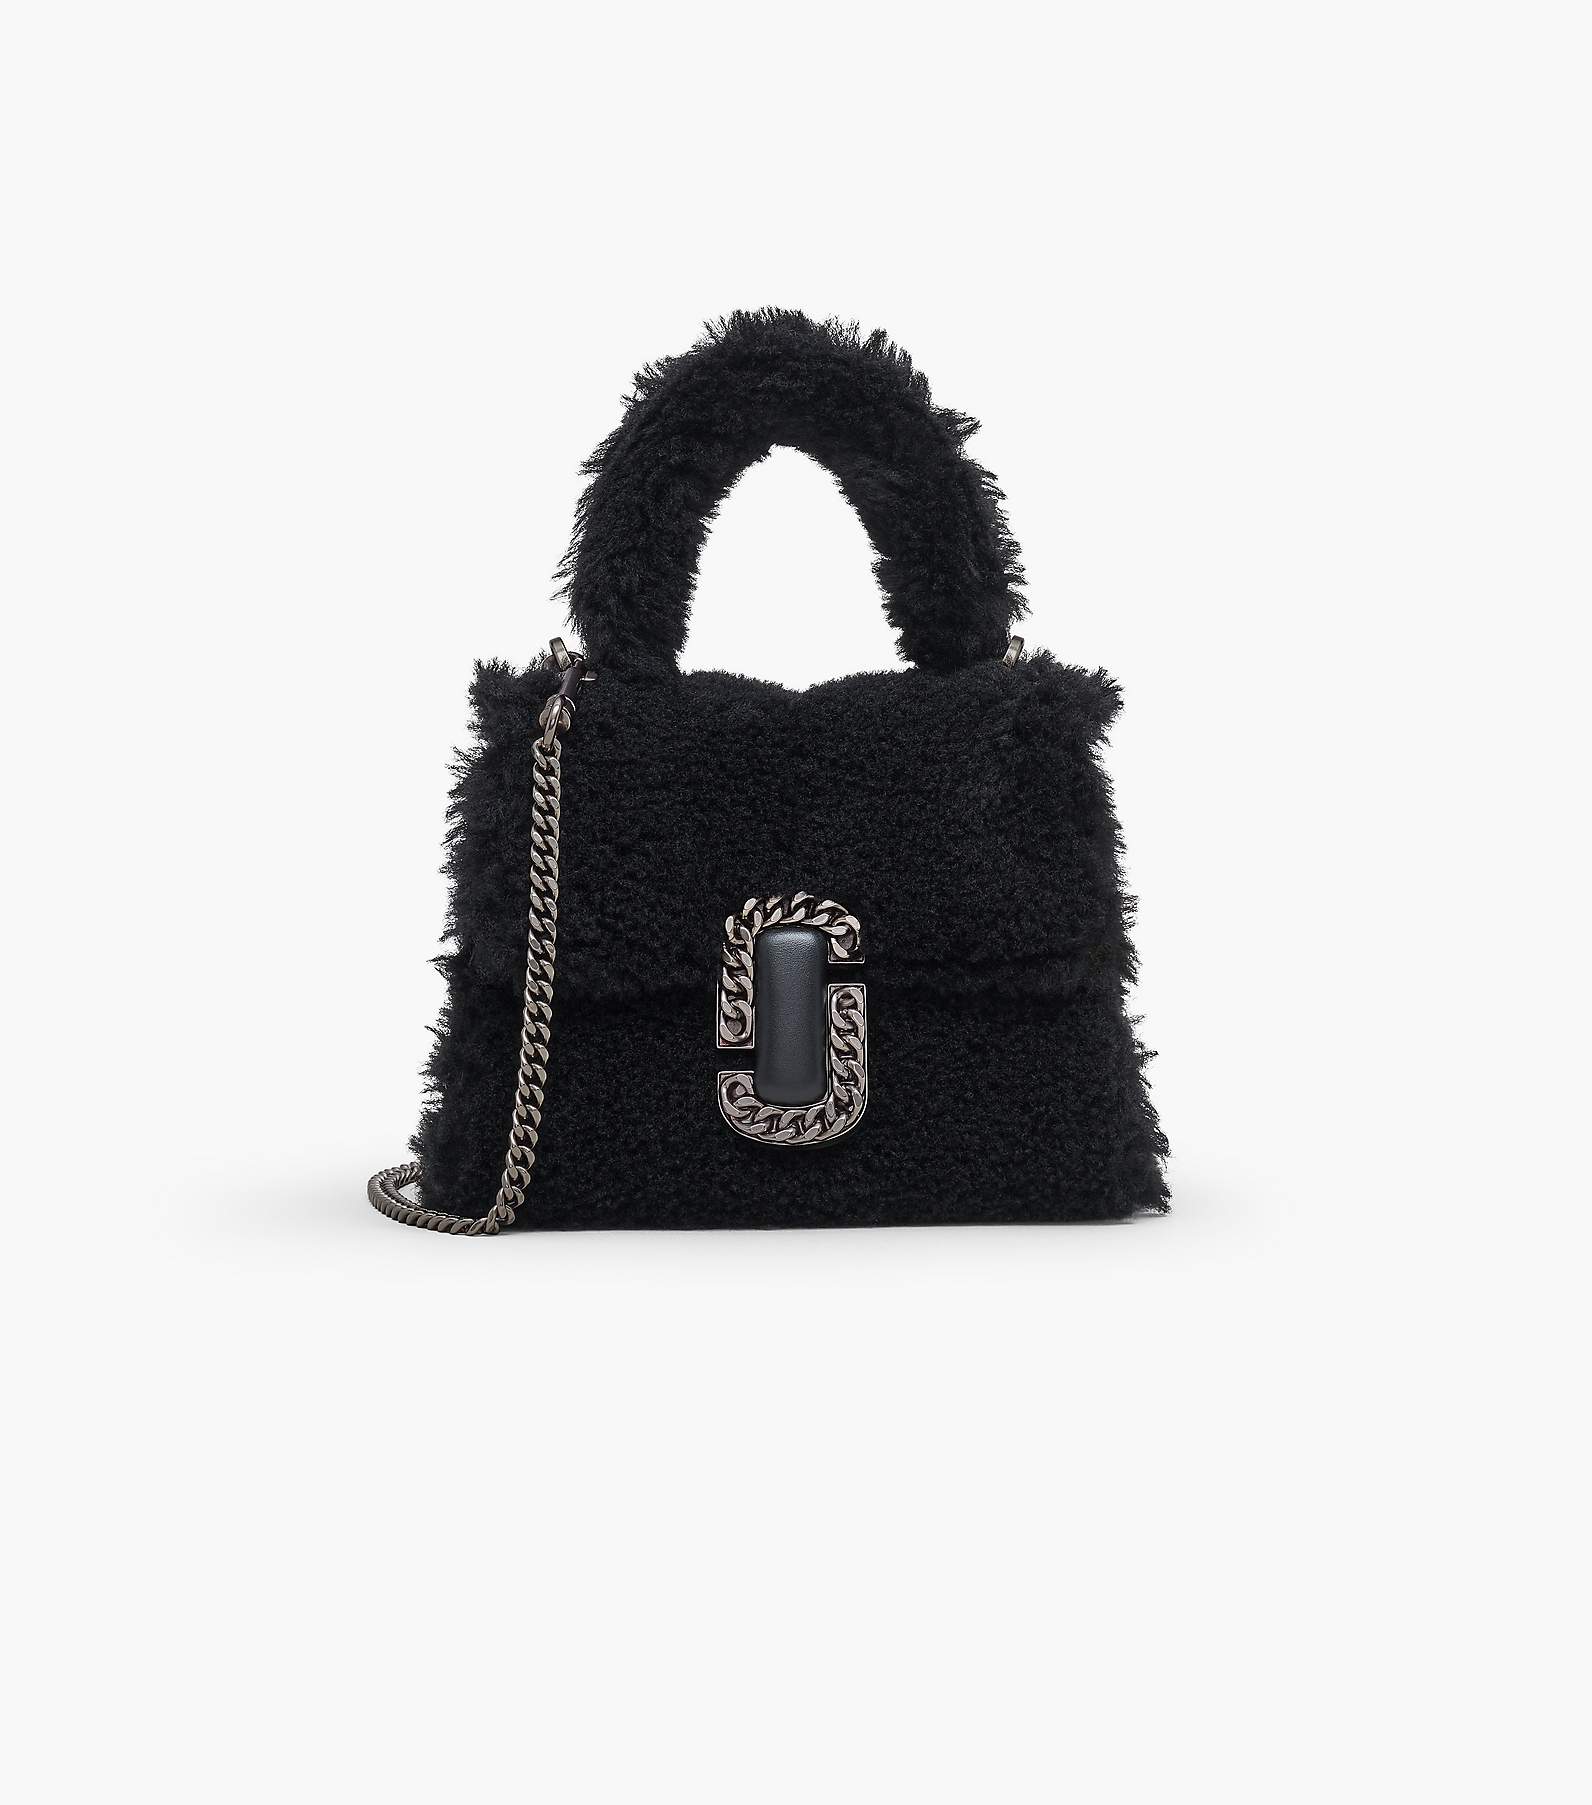 8 Best Marc Jacobs Bags : Tote Bag, Camera Bag & More